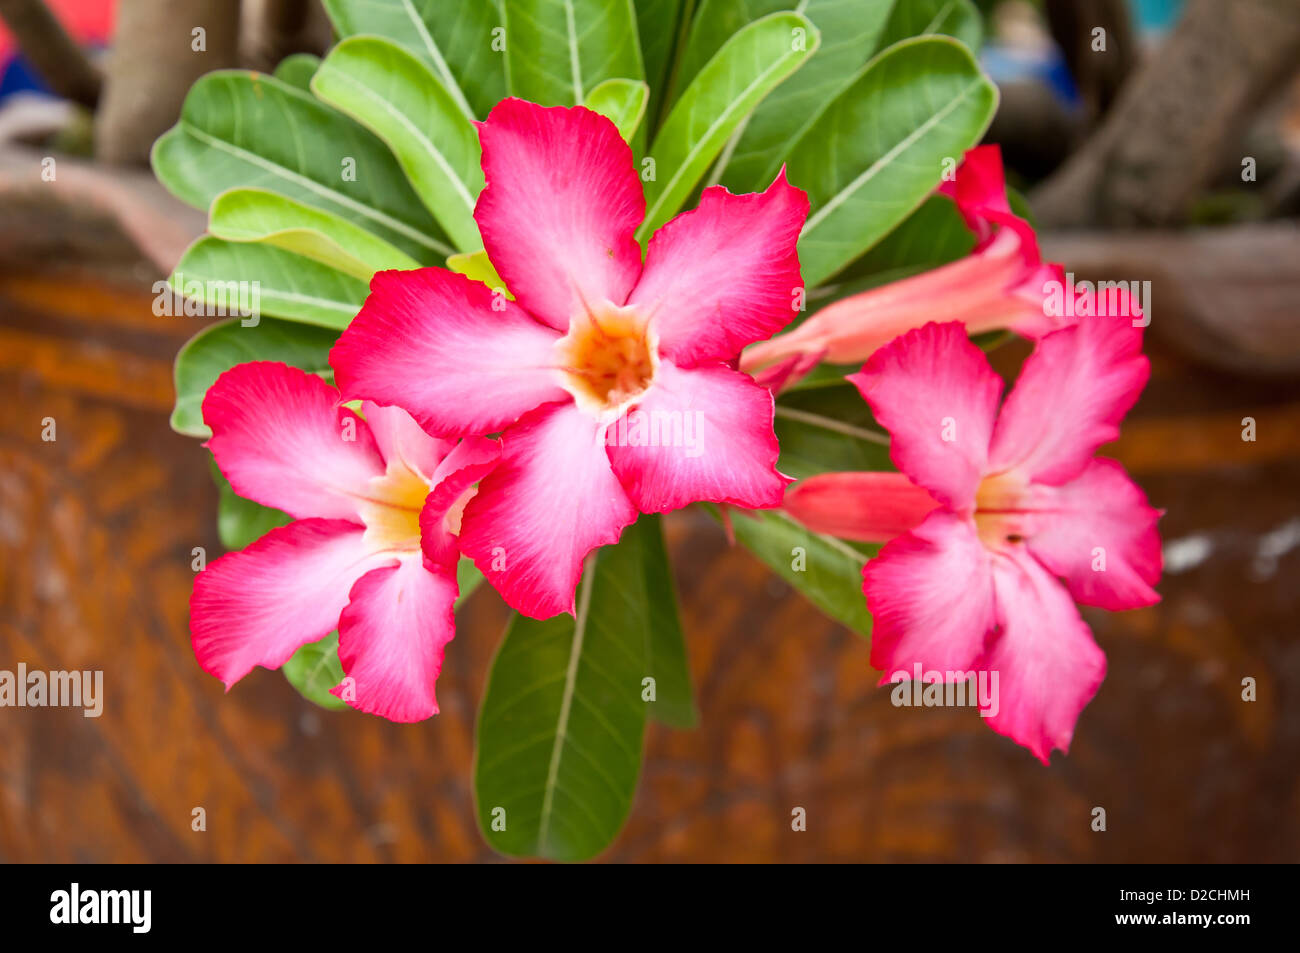 desert rose flower from tropical climate Stock Photo